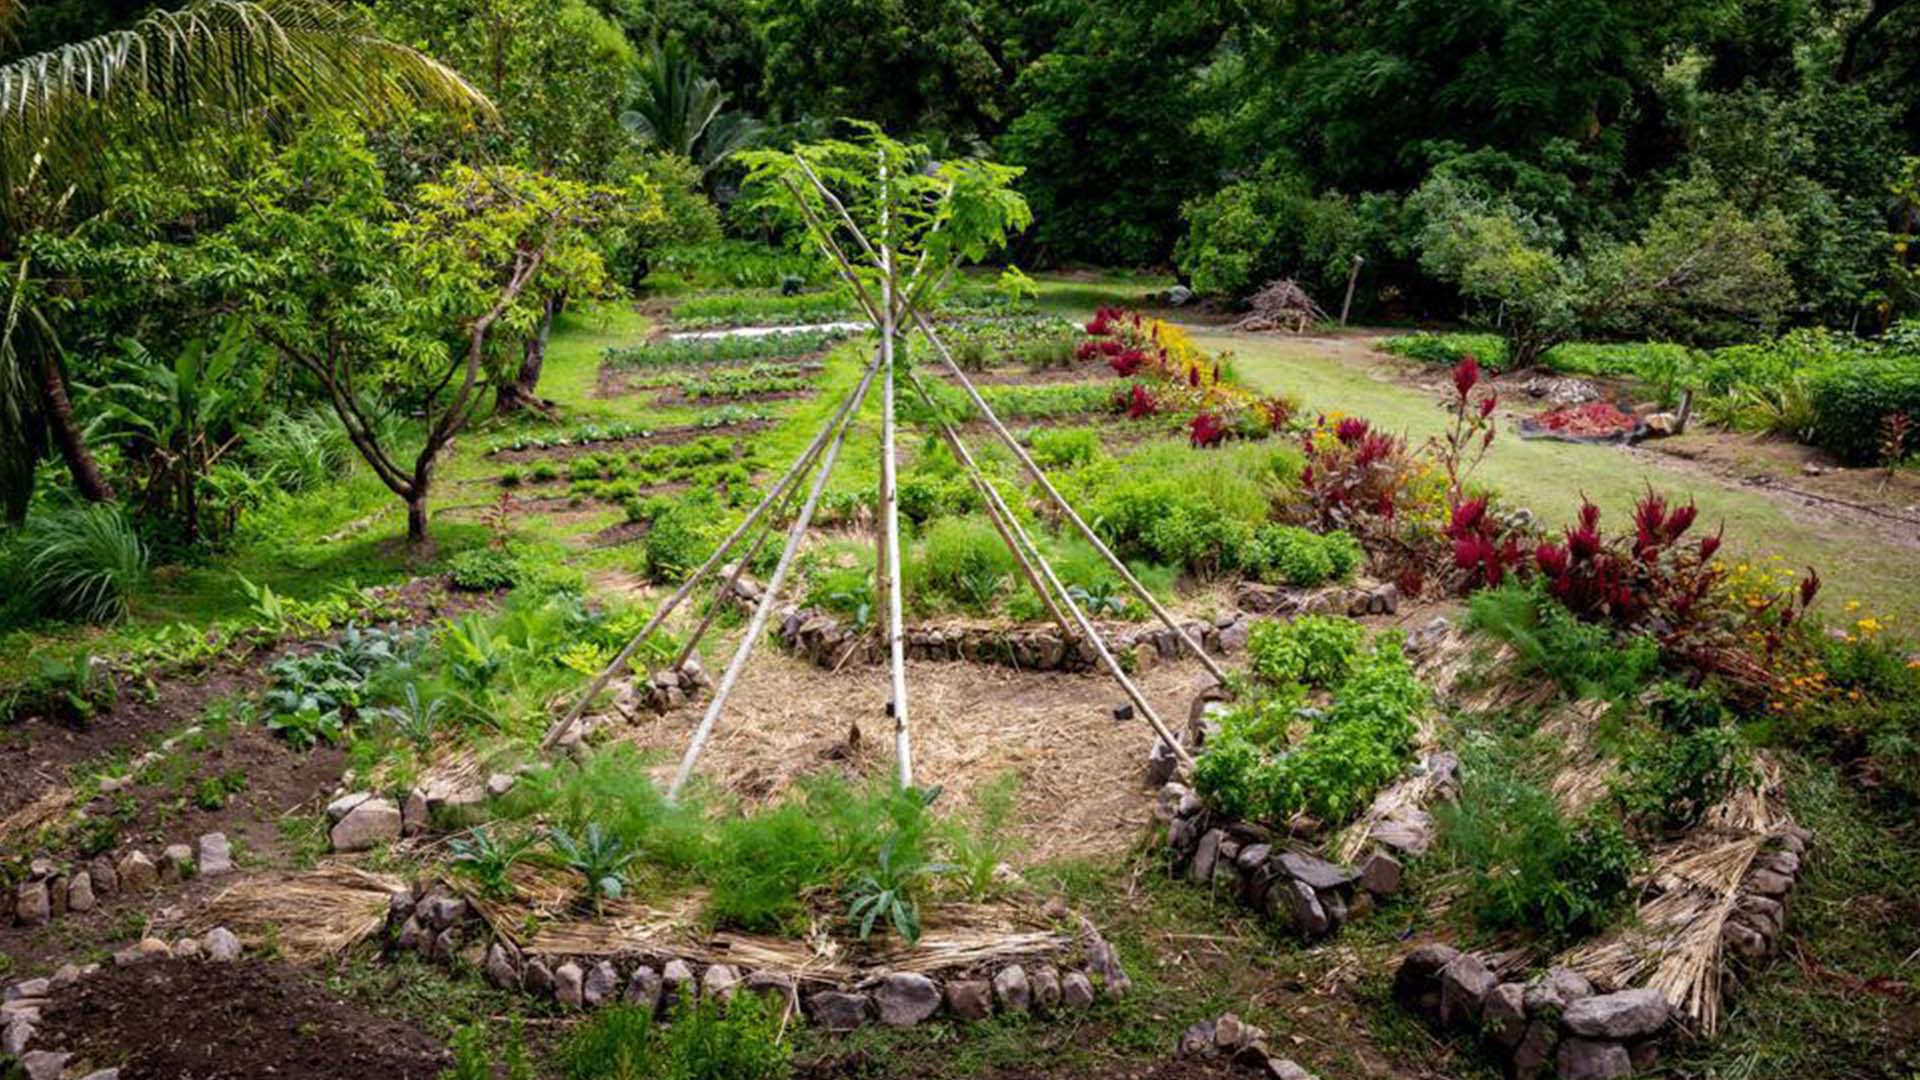 An interactive experience includes a labyrinth garden JADE MOUNTAIN